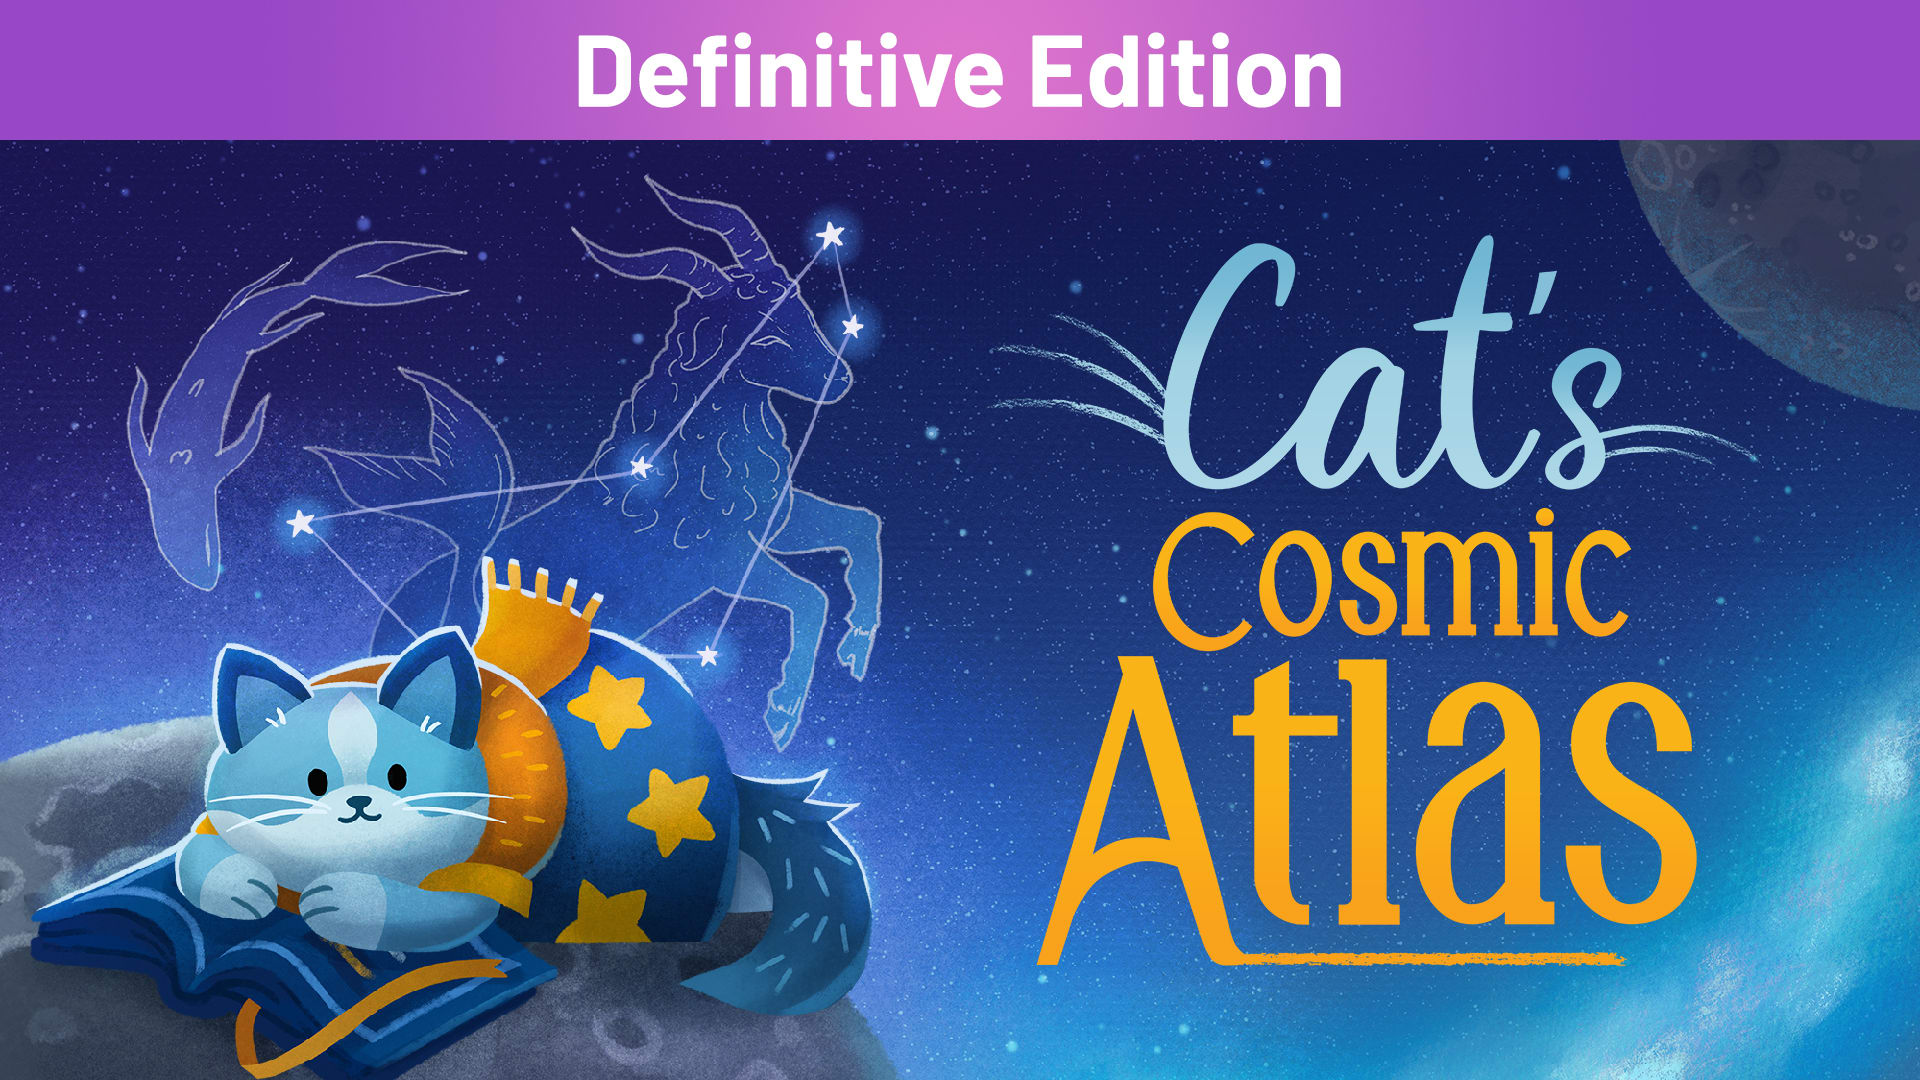 Cat's Cosmic Atlas Definitive Edition